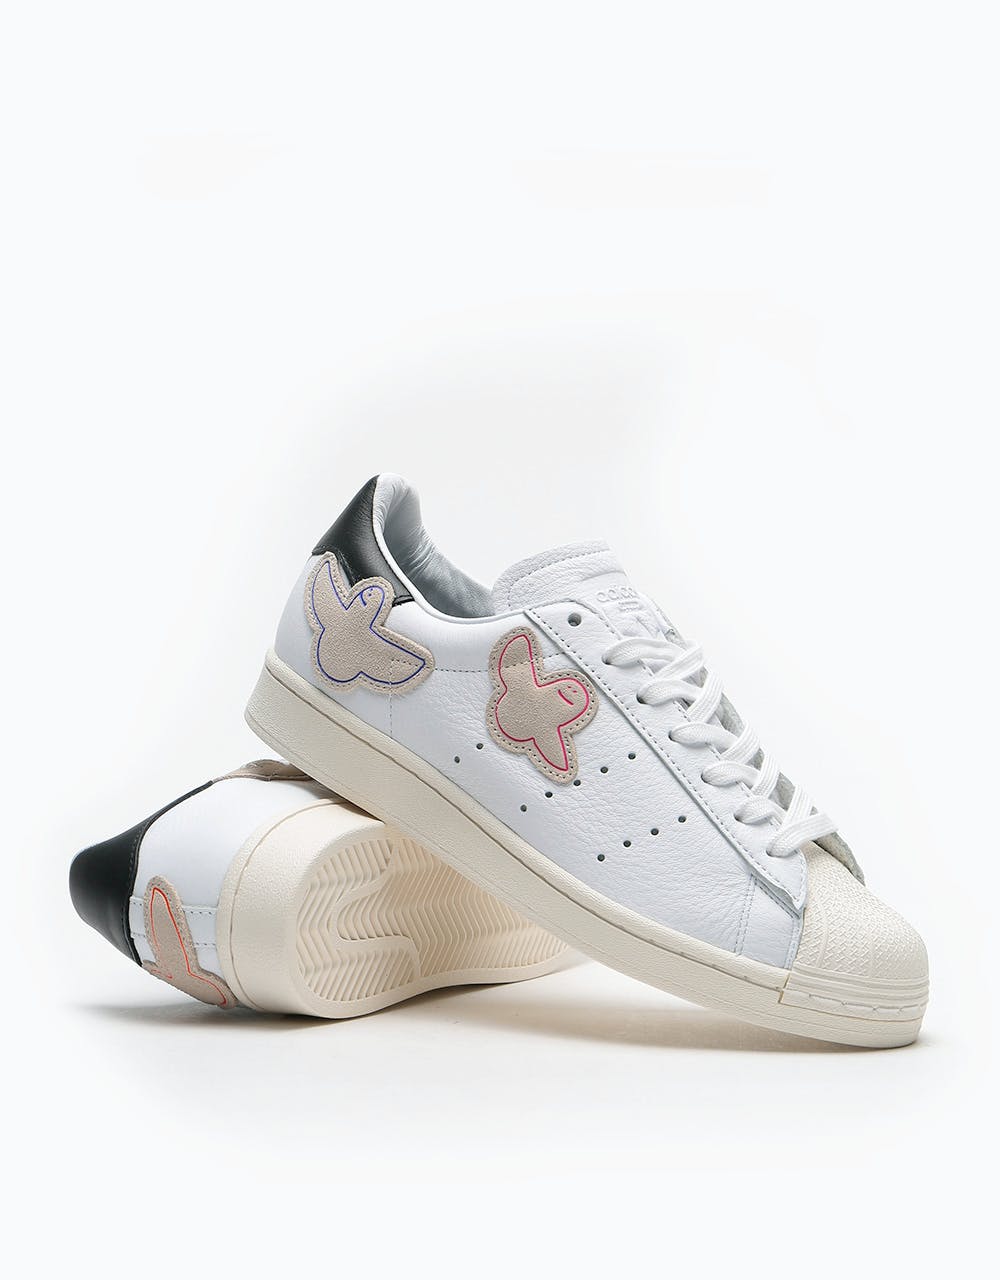 Adidas x Gonz Superstar 80's Skate Shoes - White/Core Black/Chalk Whit